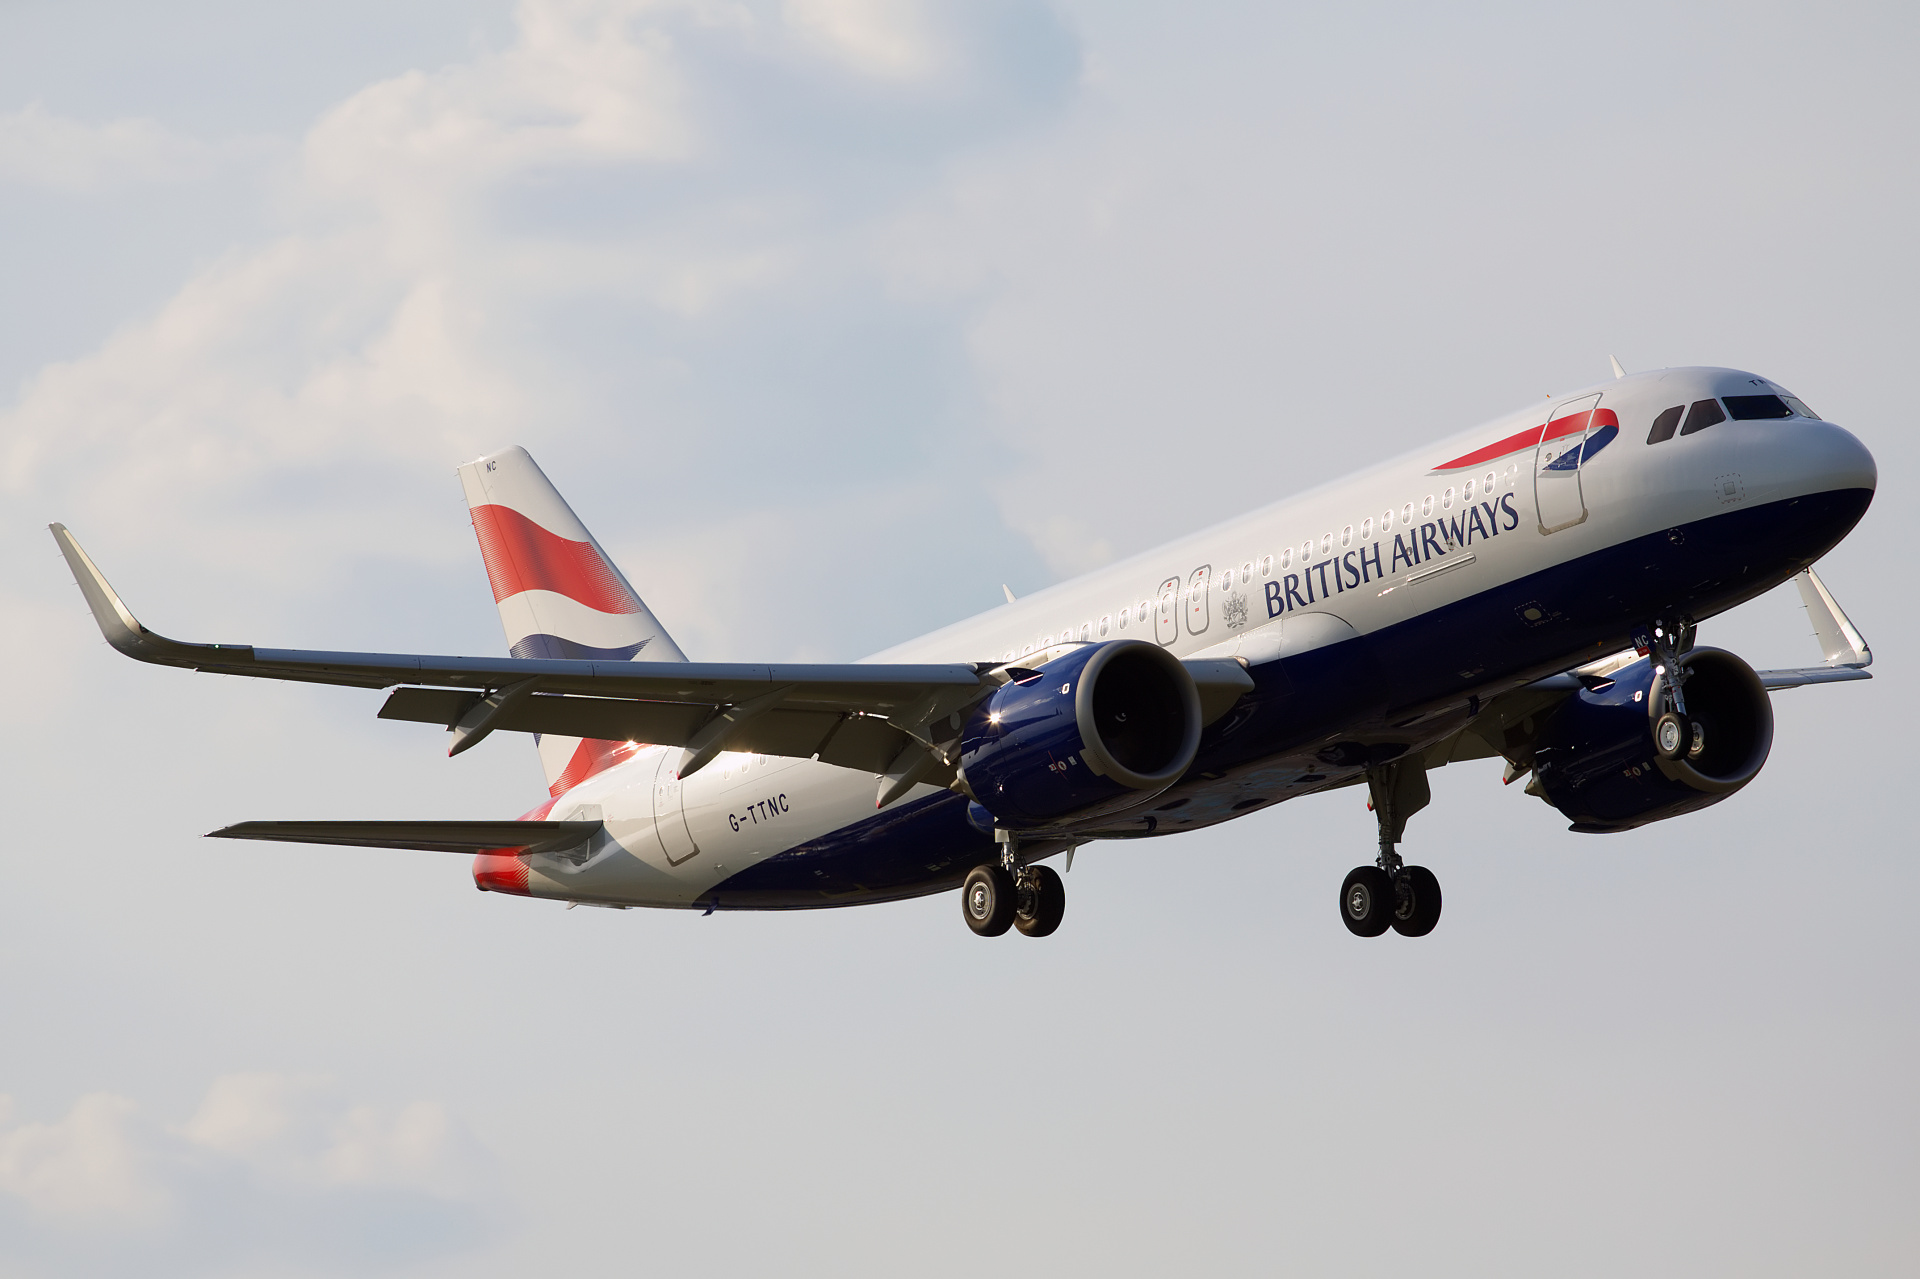 G-TTNC, British Airways (Aircraft » EPWA Spotting » Airbus A320neo » British Airways)